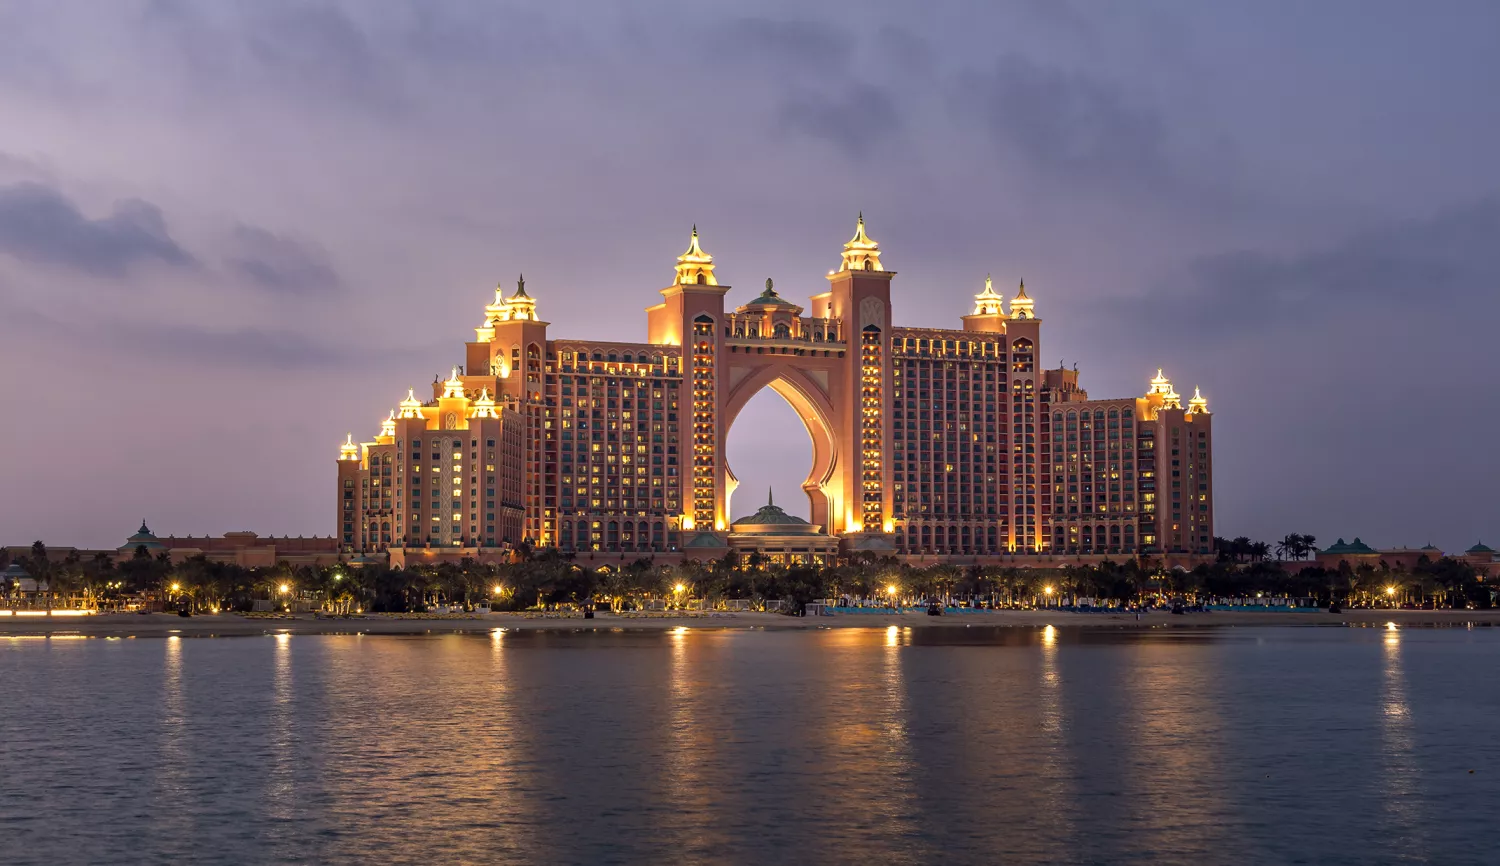 Atlantis The Palm - Dubai - United Arab Emirates